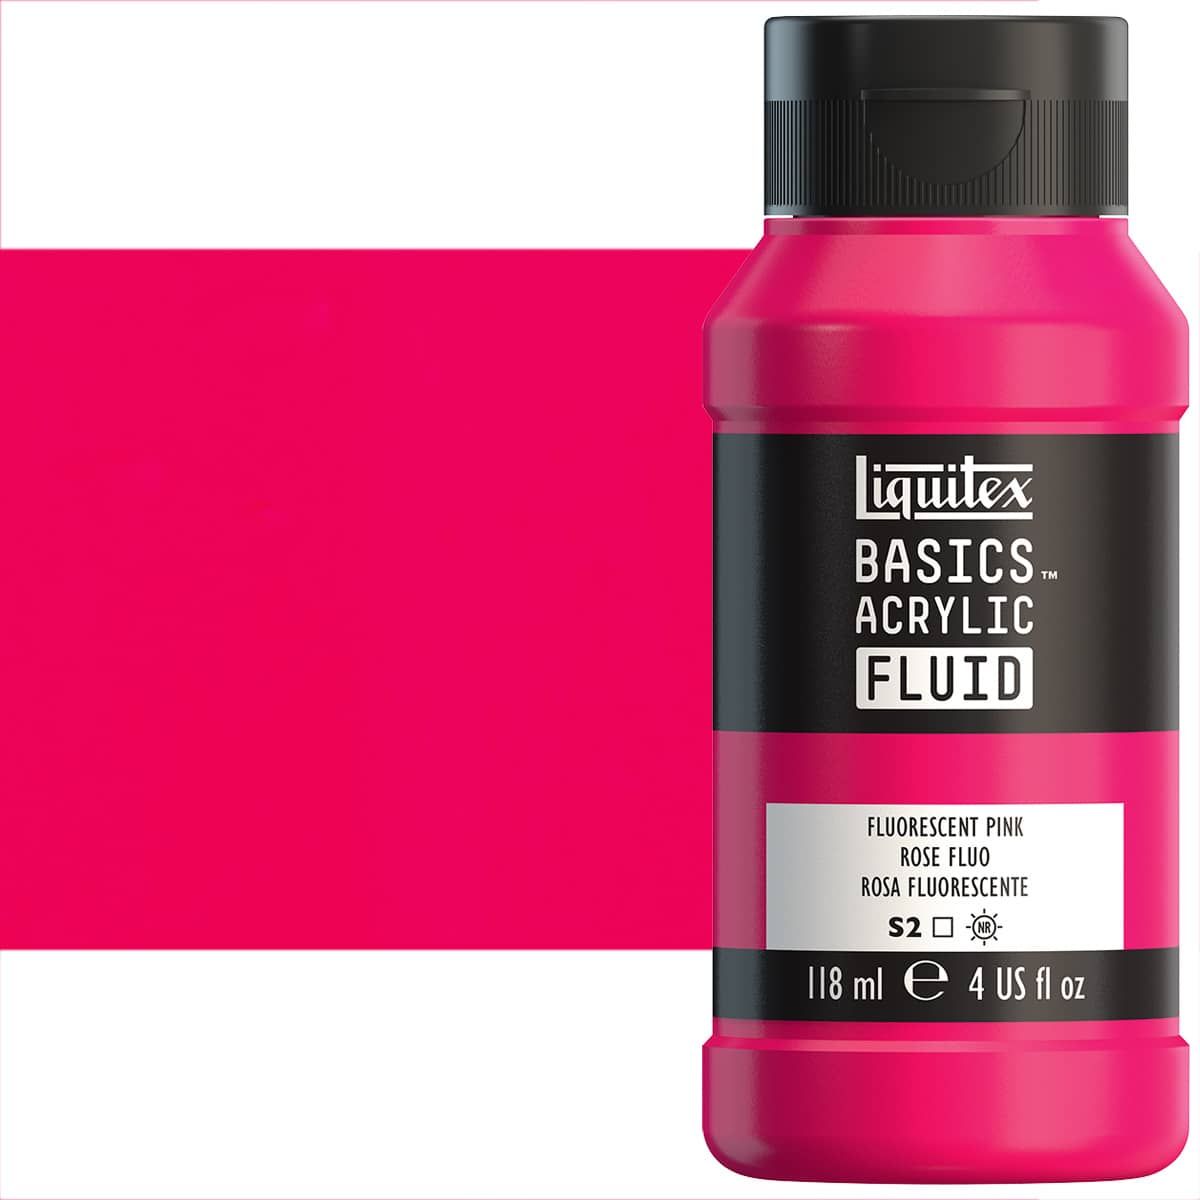 Liquitex BASICS Acrylic Fluid - Fluorescent Pink, 4oz Bottle